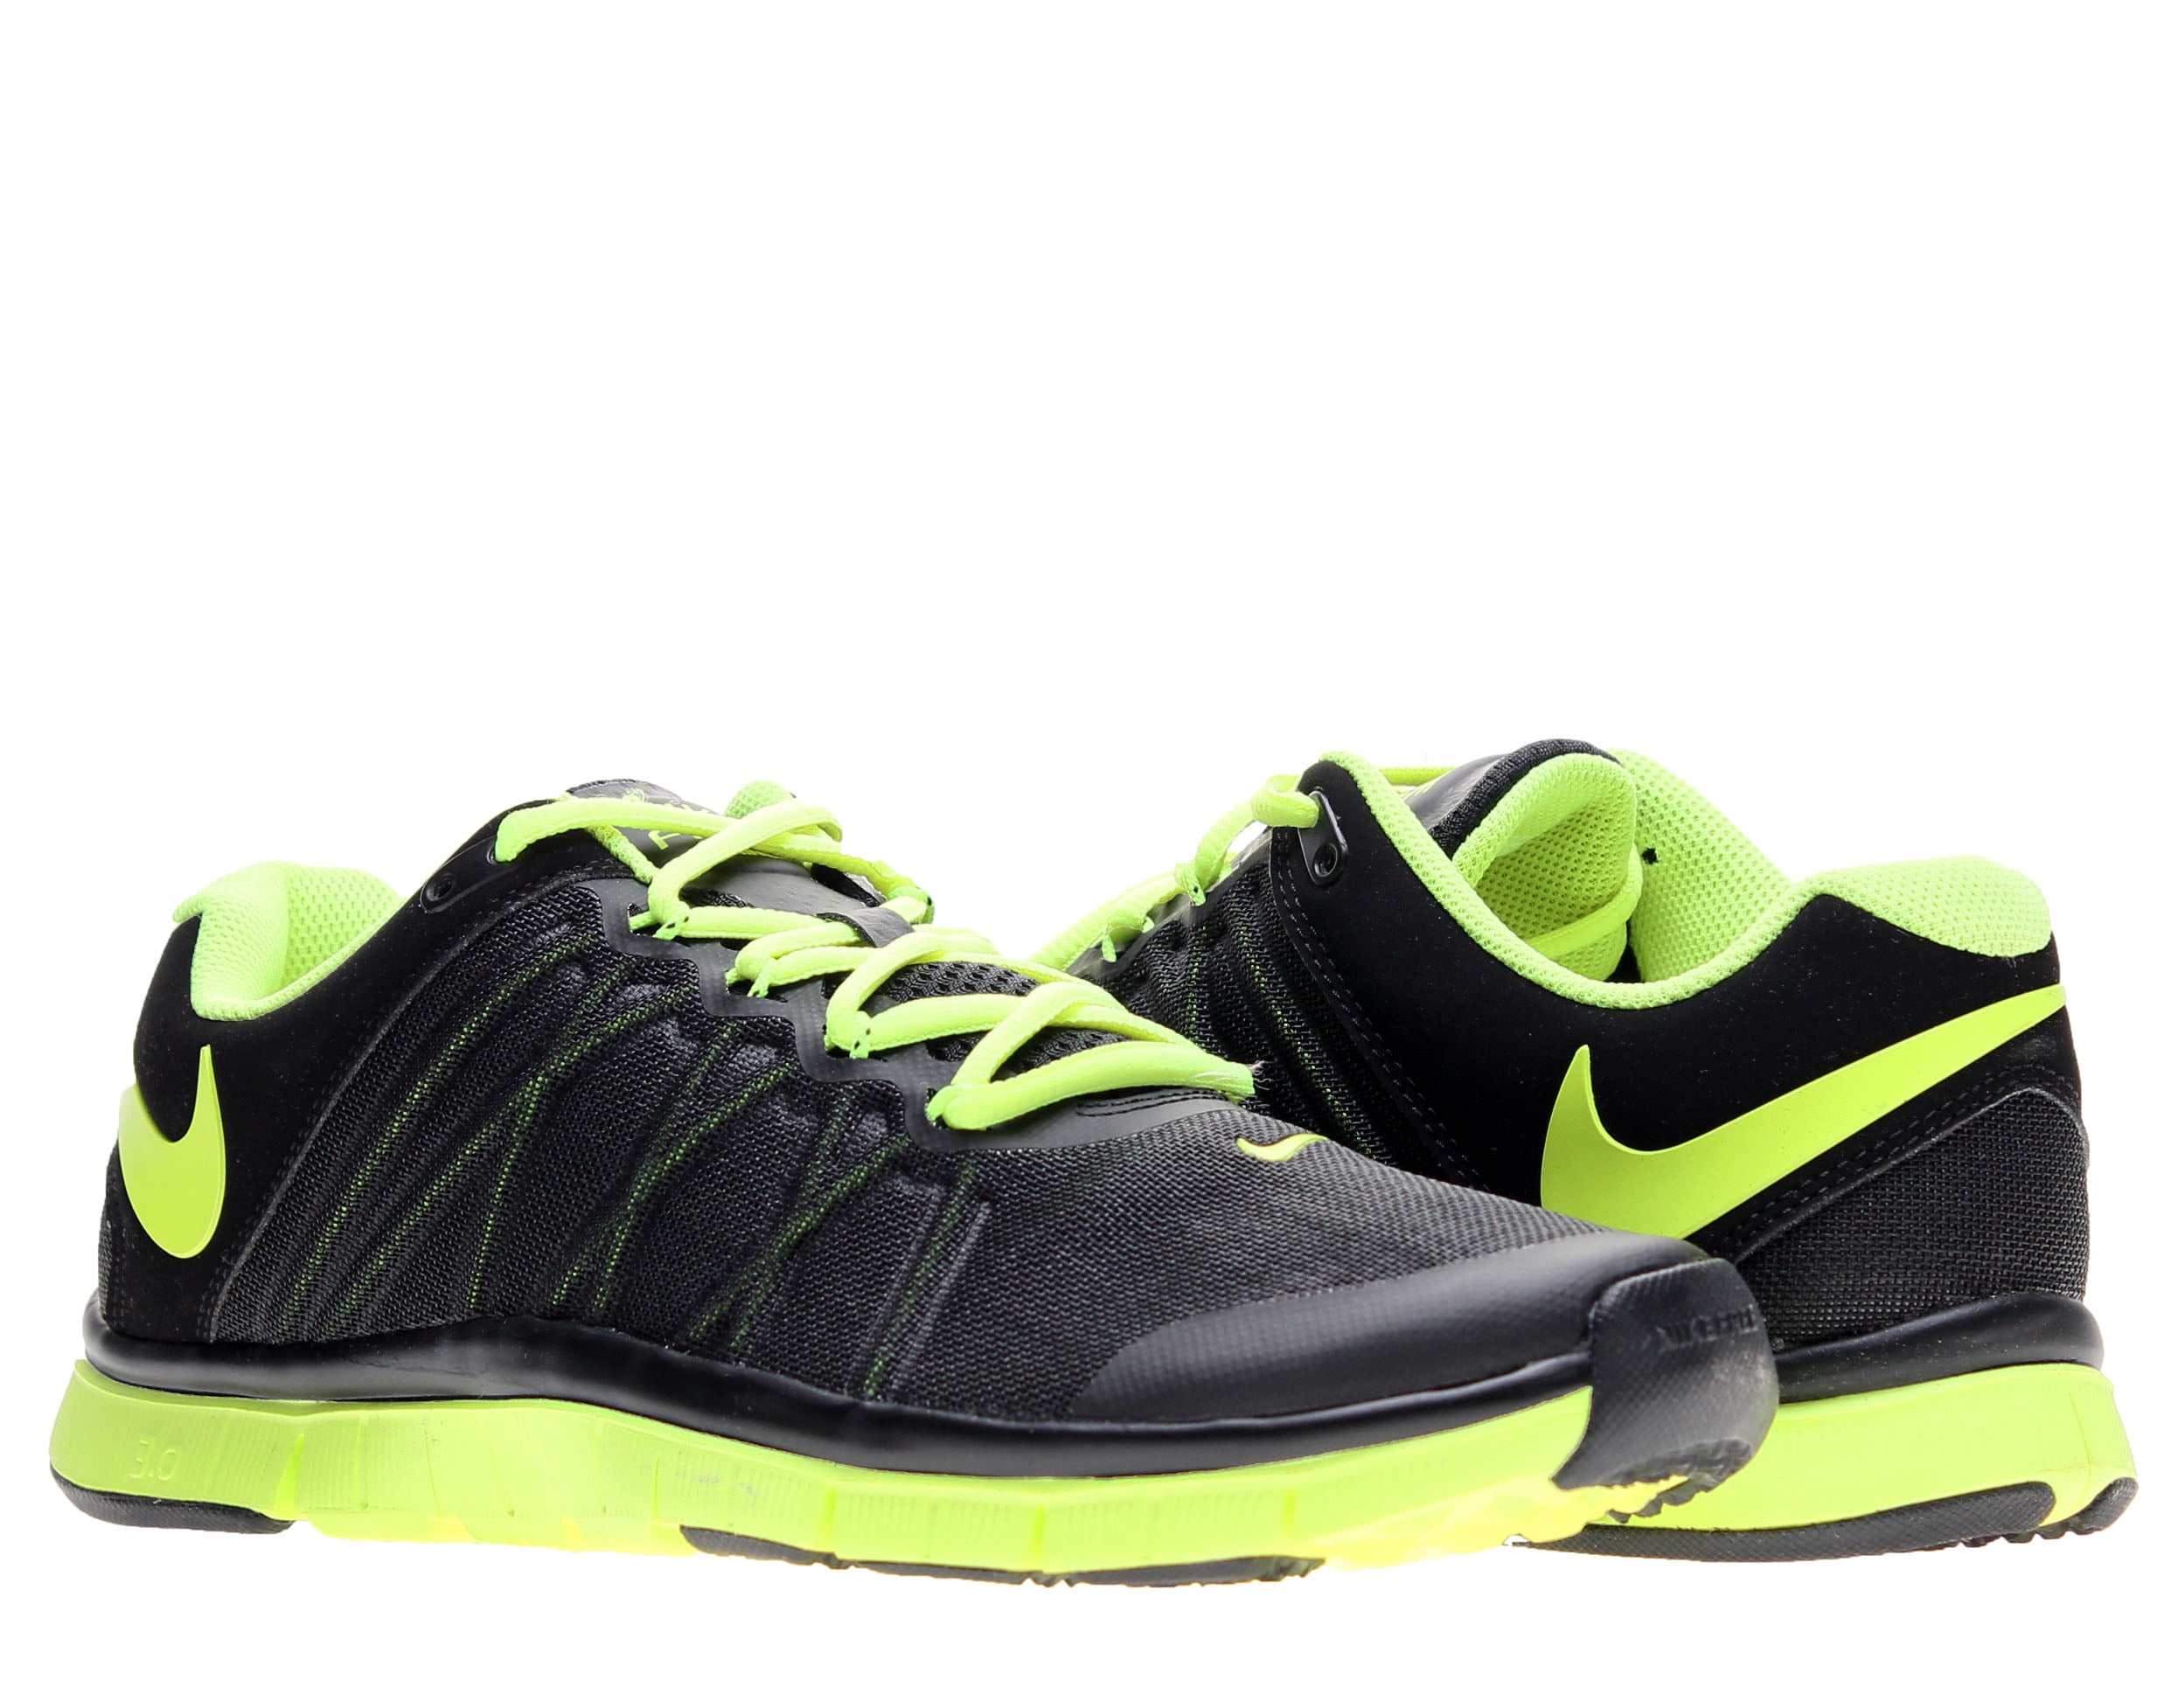 Nike Free Trainer 3.0 Cross Training Shoes Size 12 - Walmart.com